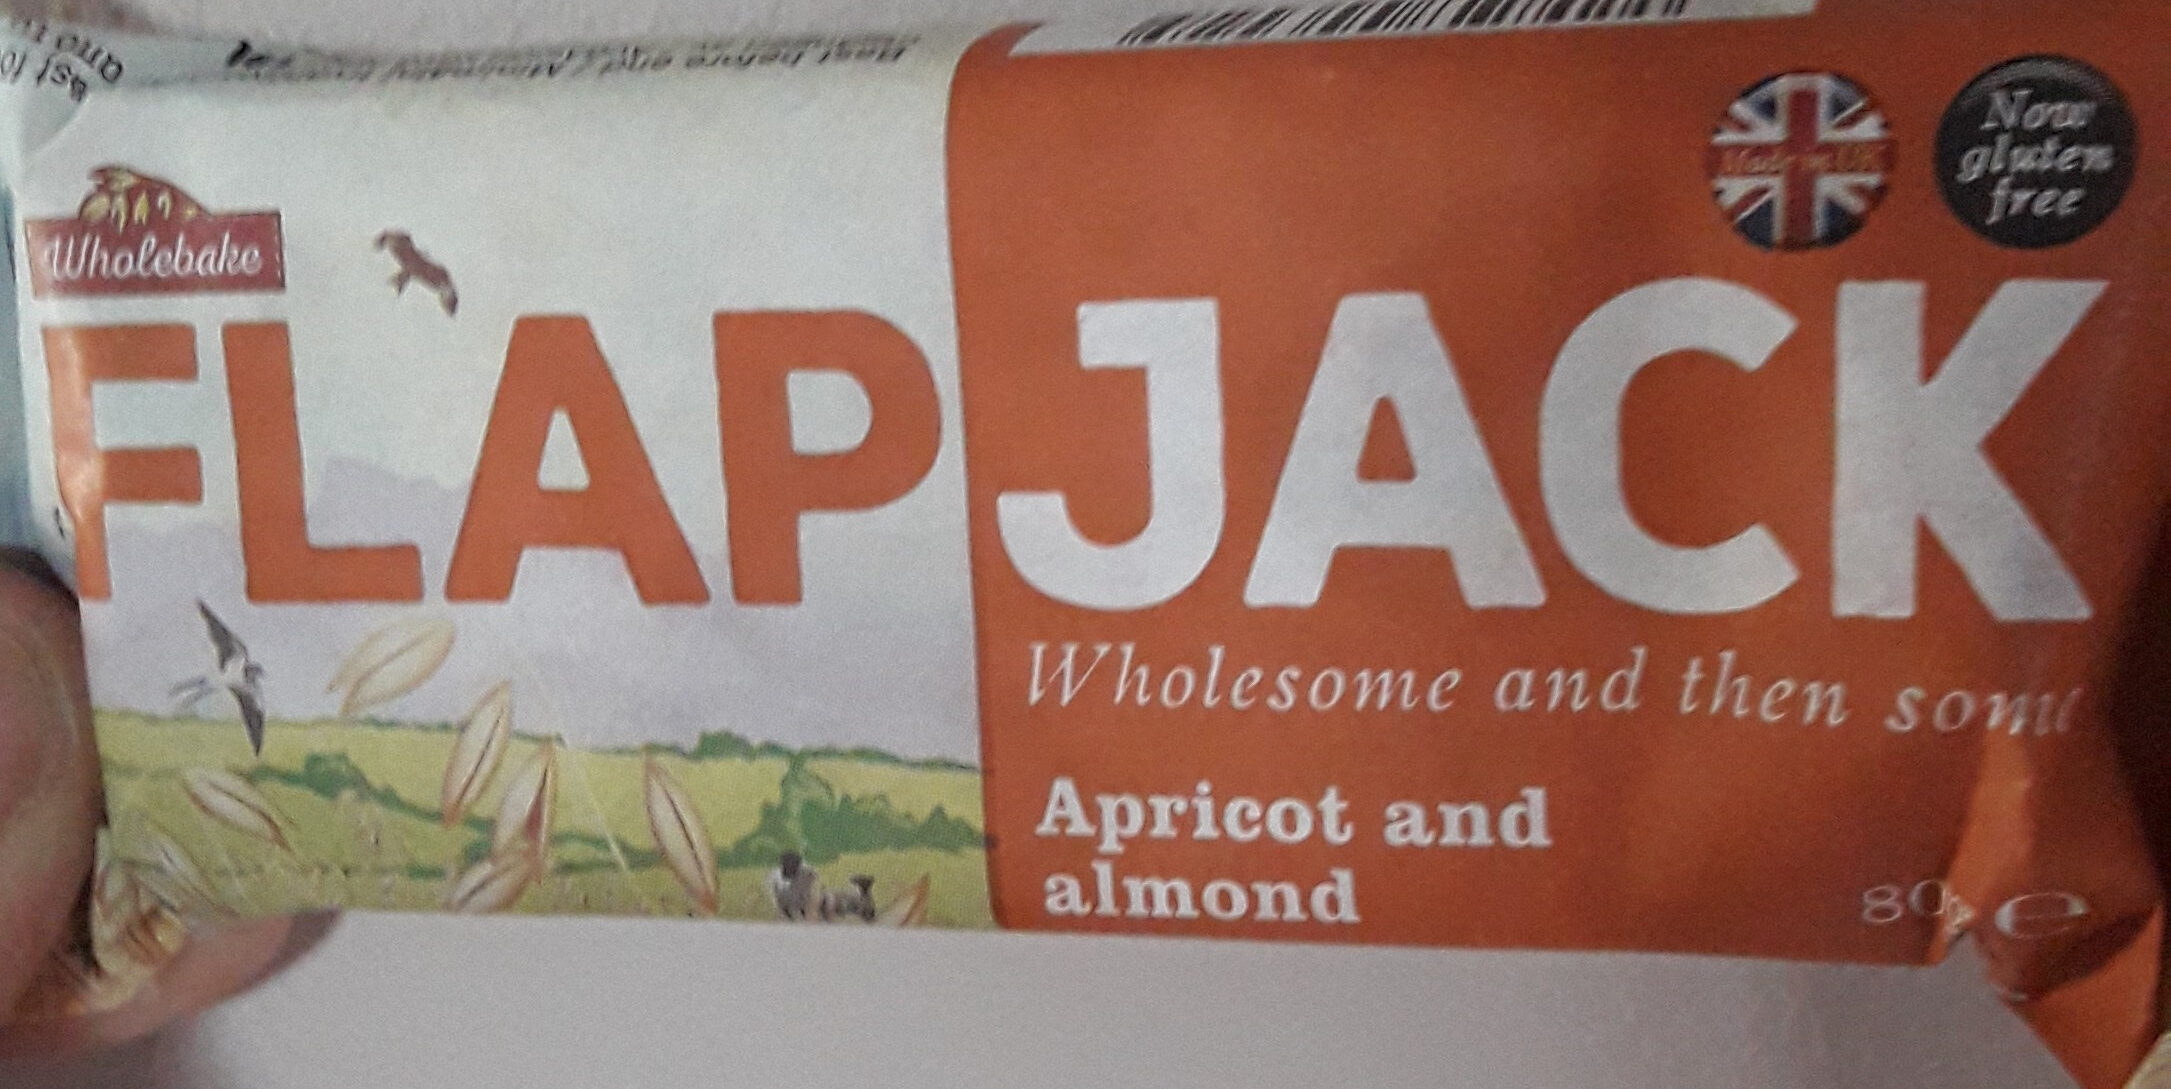 Flapjack abricot amande - Produkt - en